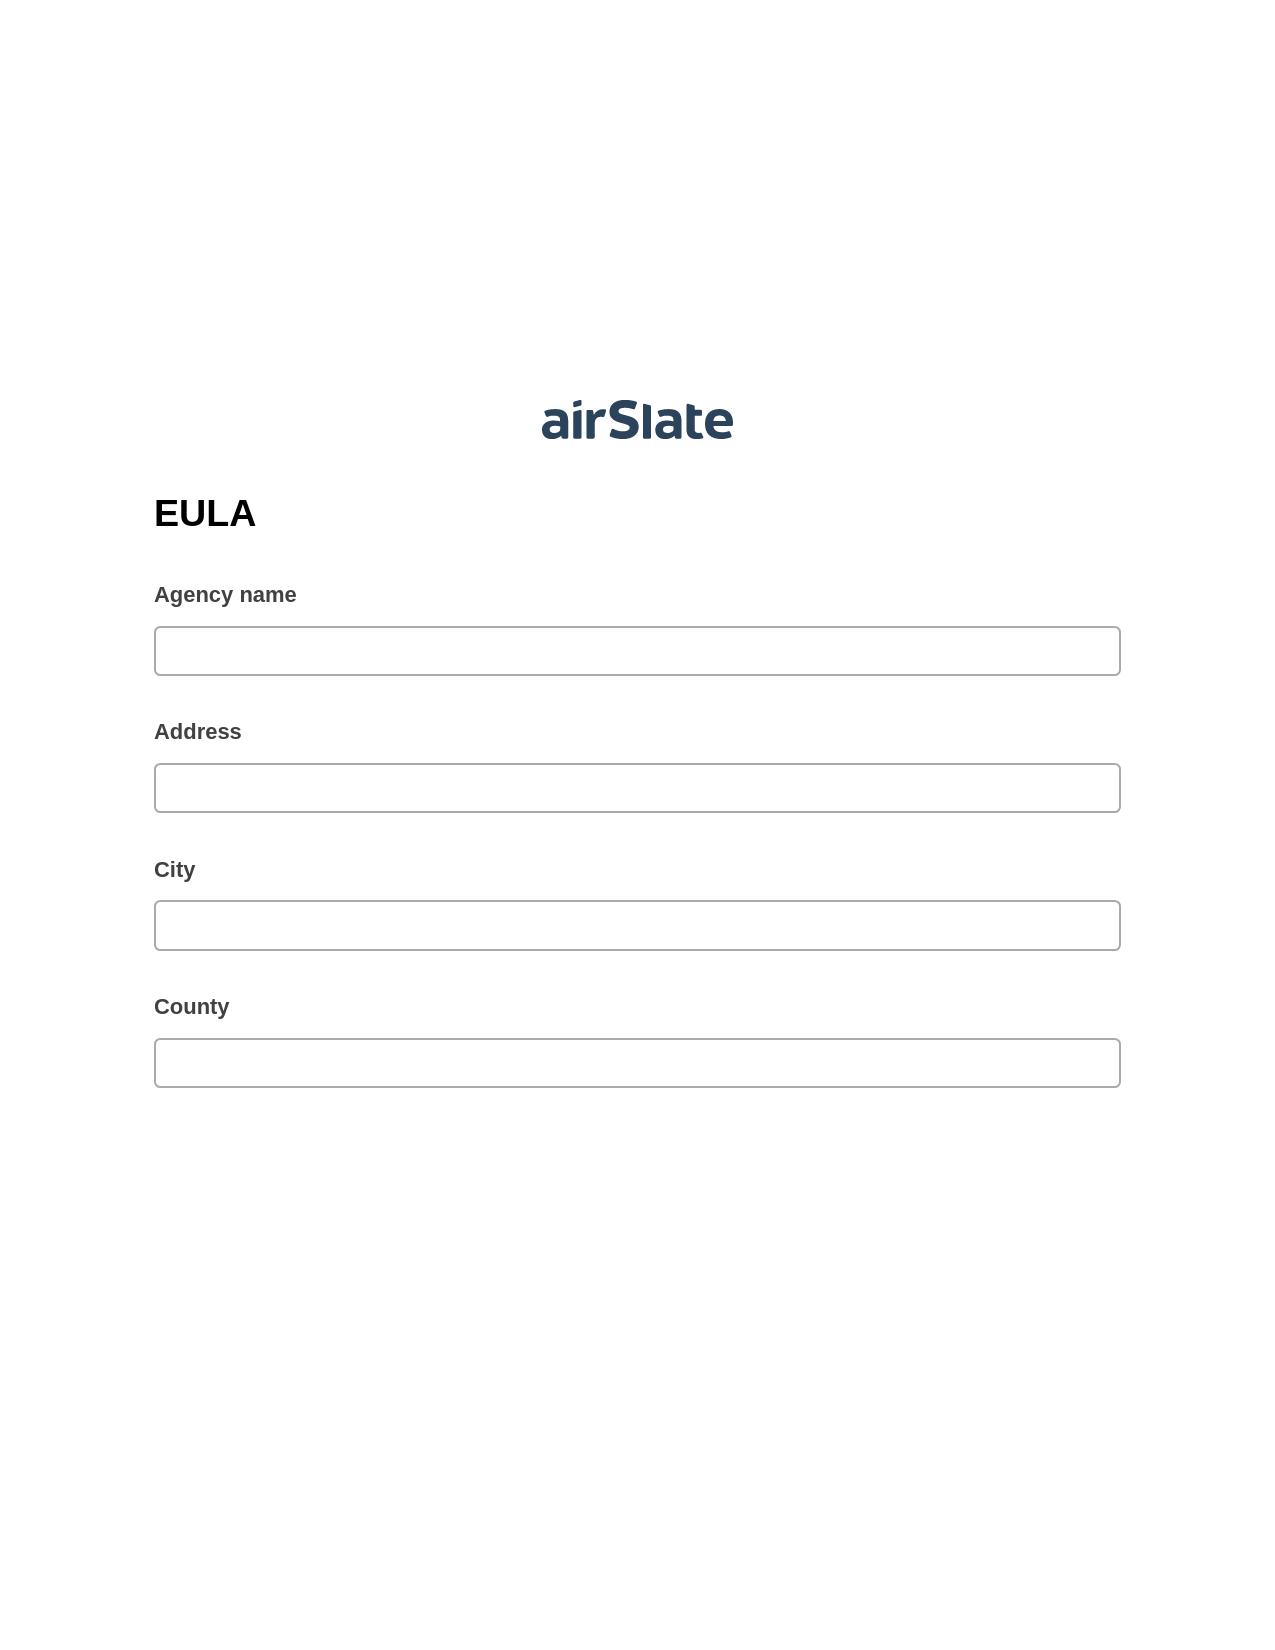 EULA Pre-fill from Excel Spreadsheet Bot, Google Sheet Two-Way Binding Bot, Dropbox Bot